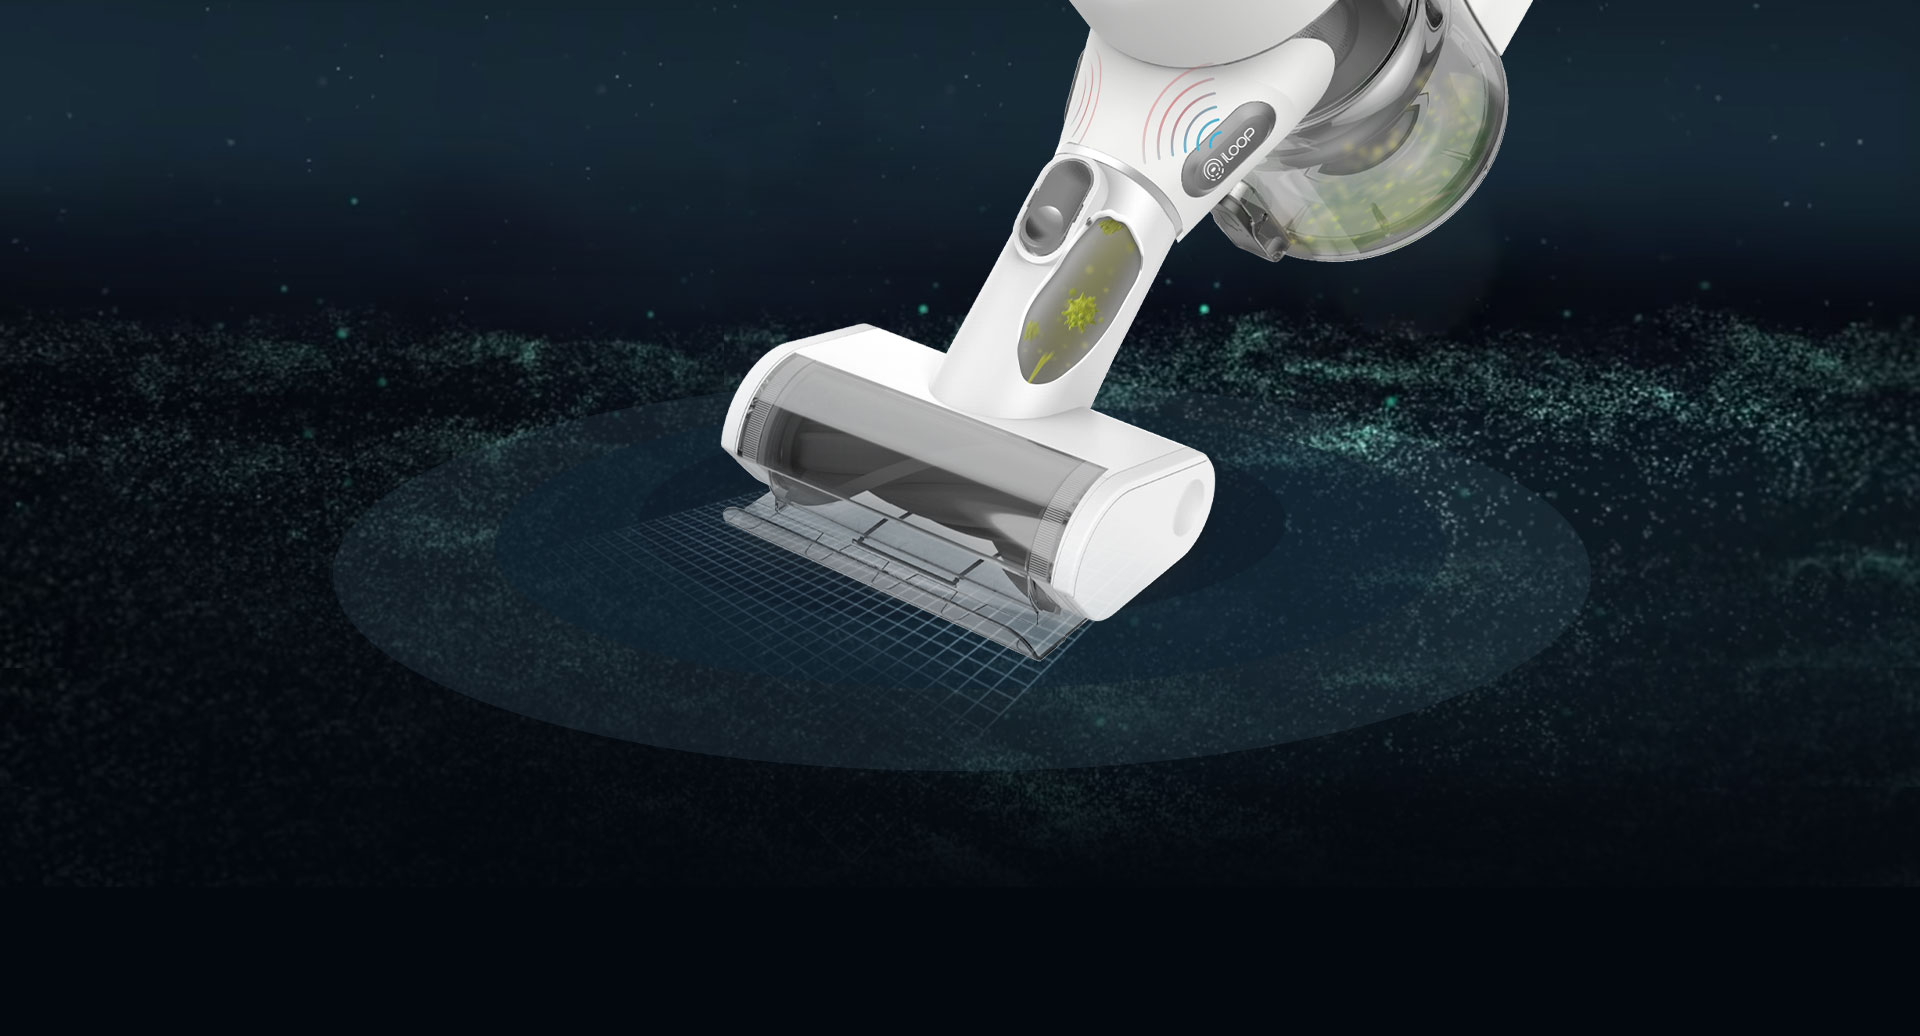 self-adjusting suction power with the iloop™ smart dust sensor